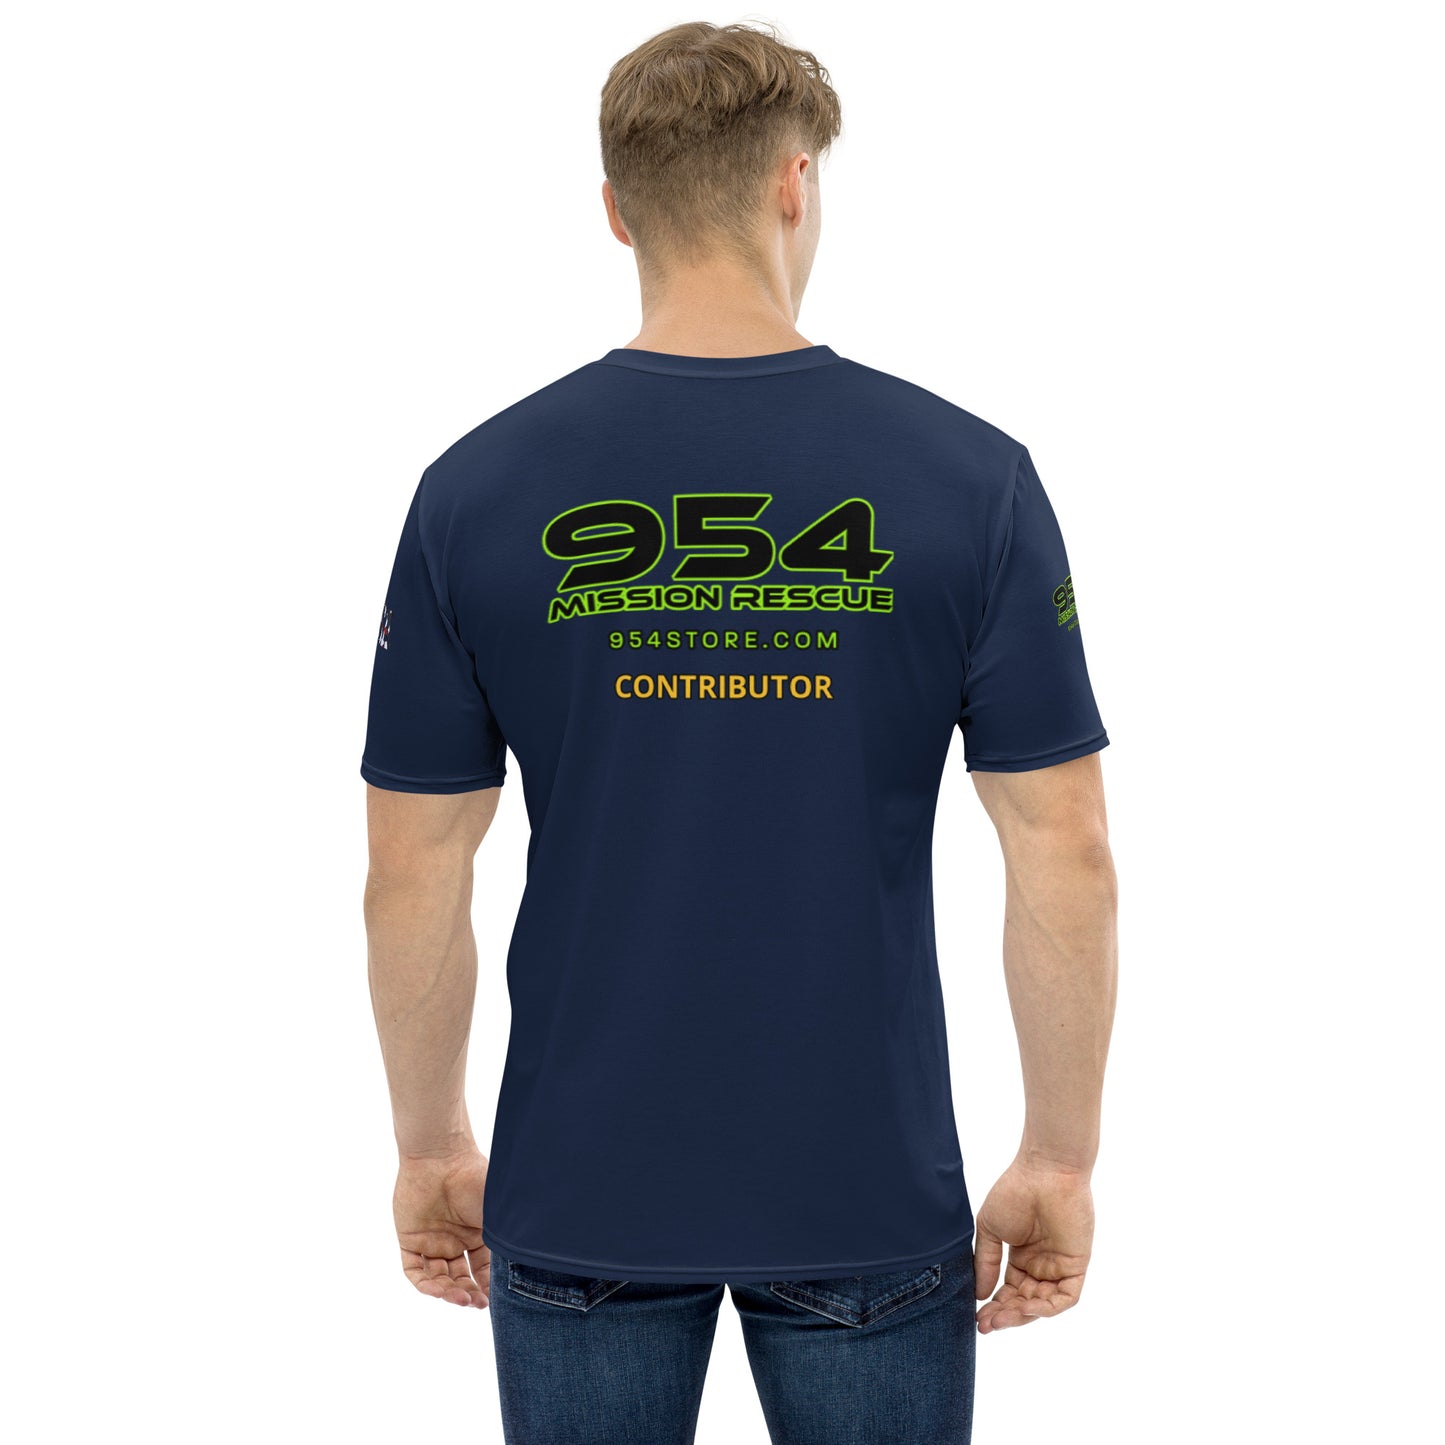 Contributor MR 954 Men's t-shirt